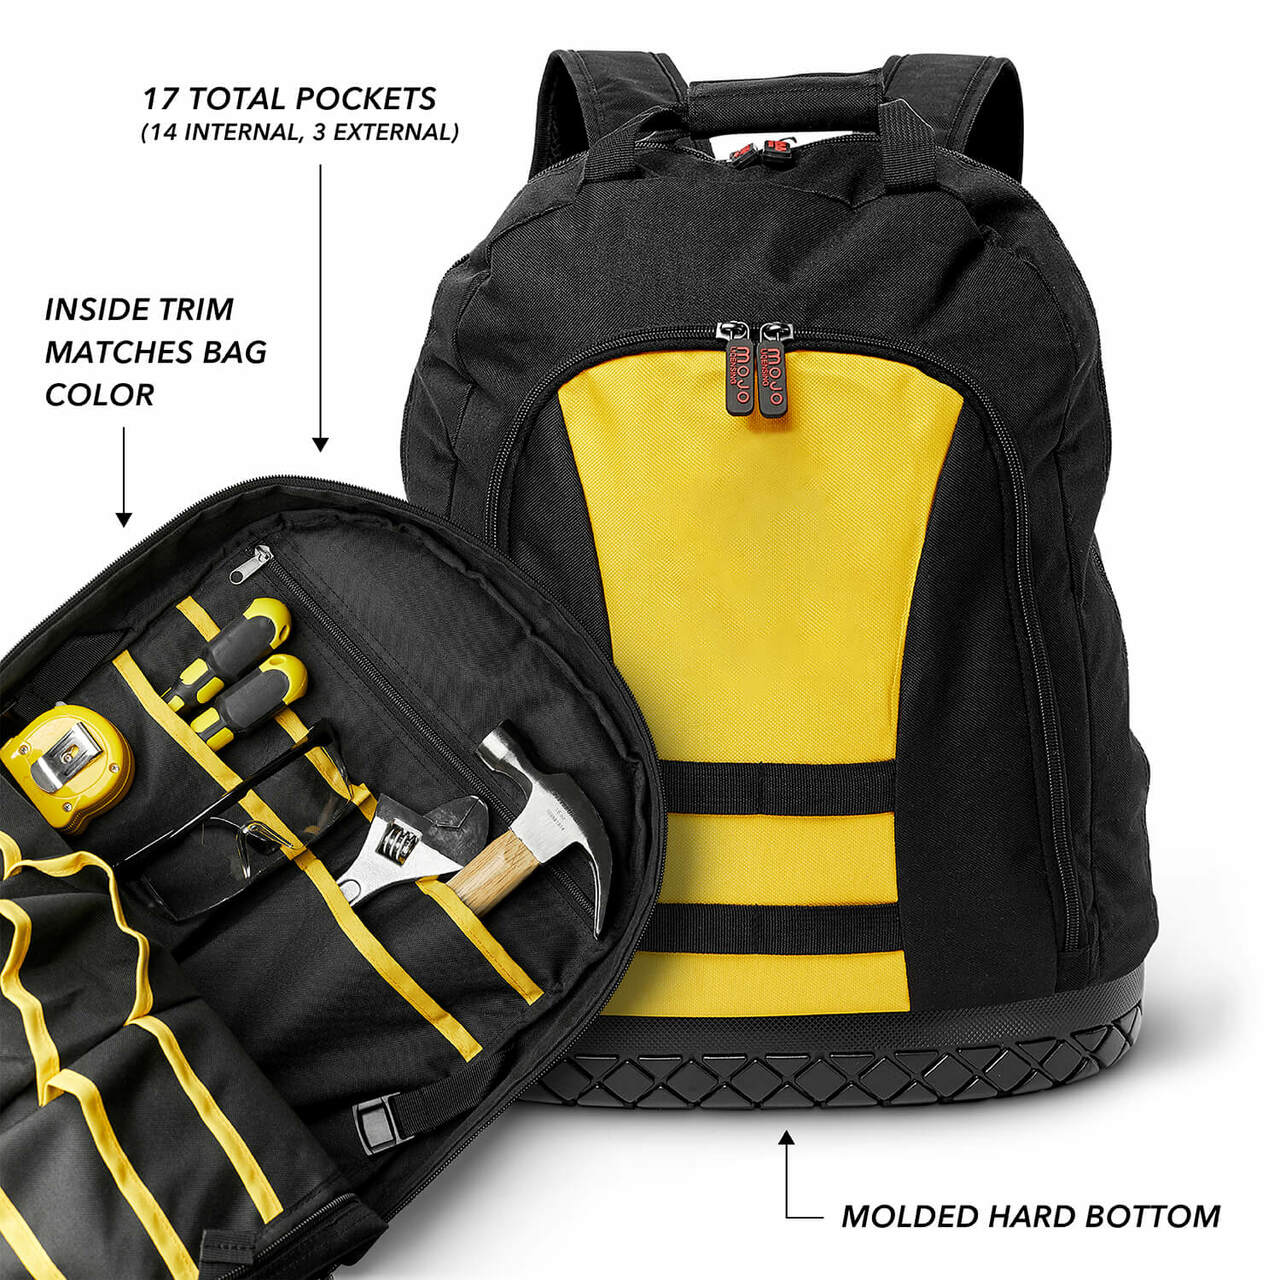 Penn State Nittany Lions Tool Bag Backpack